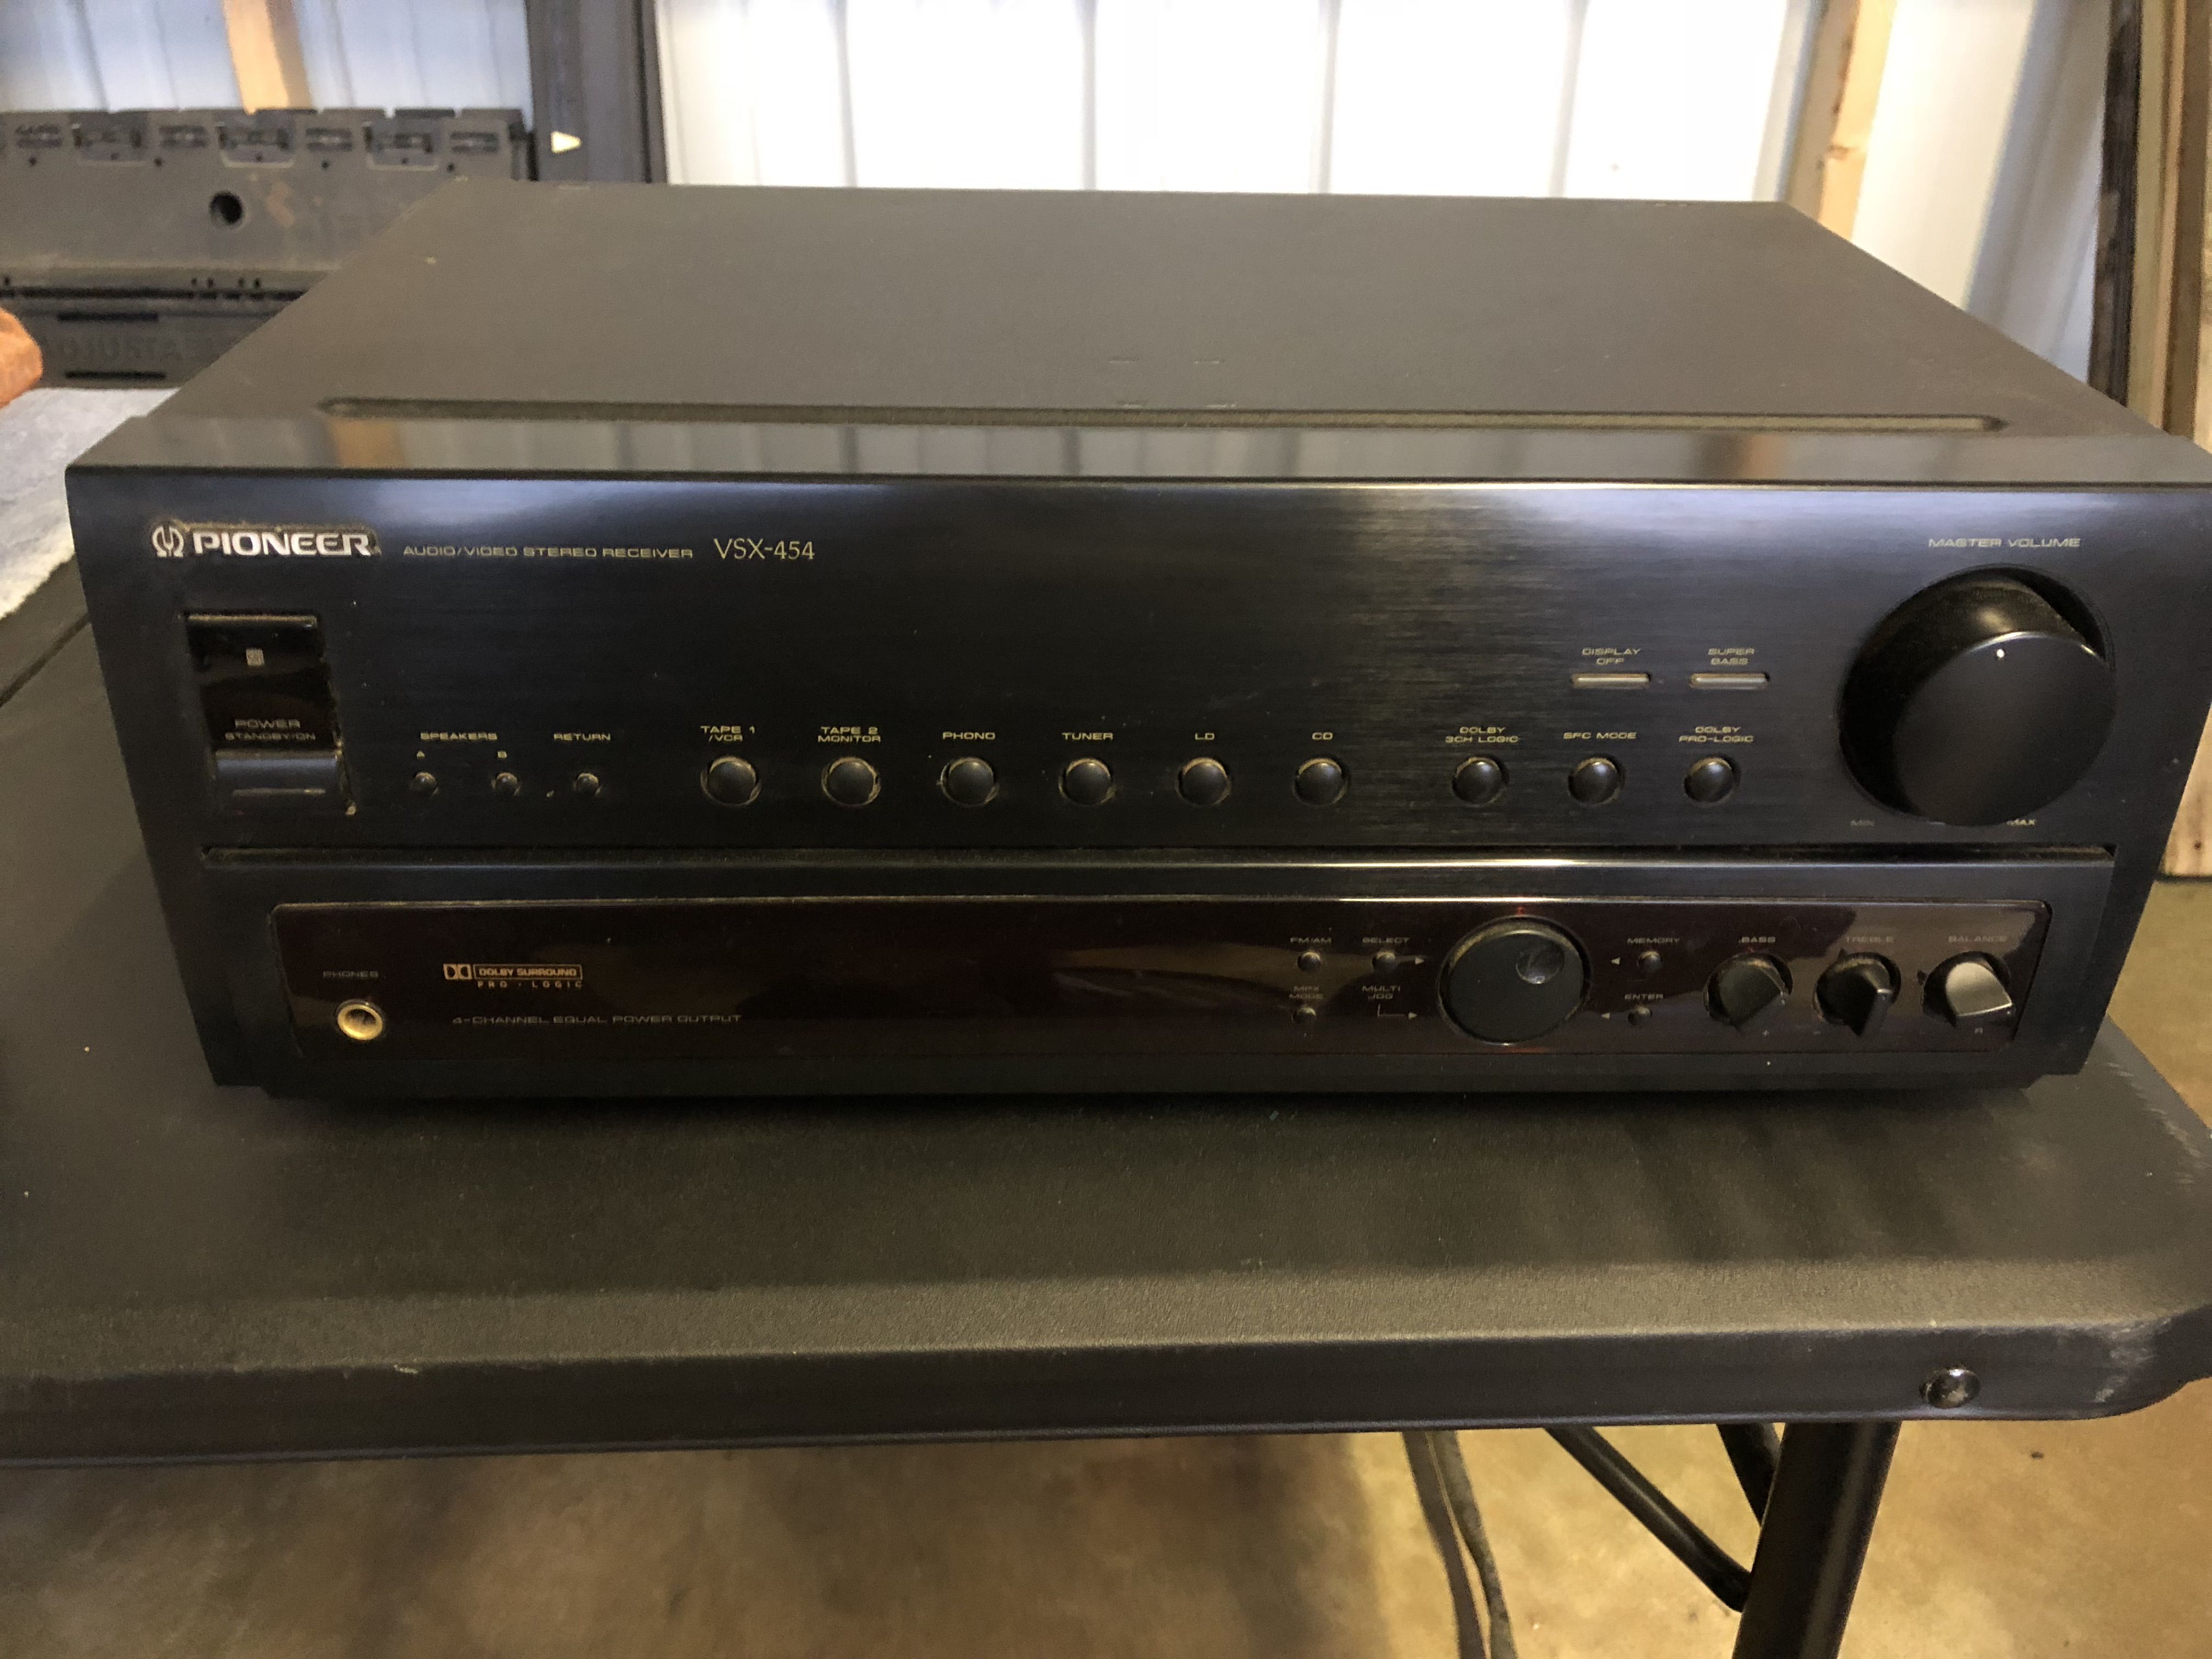 Pioneer VSX-454 stereo receiver